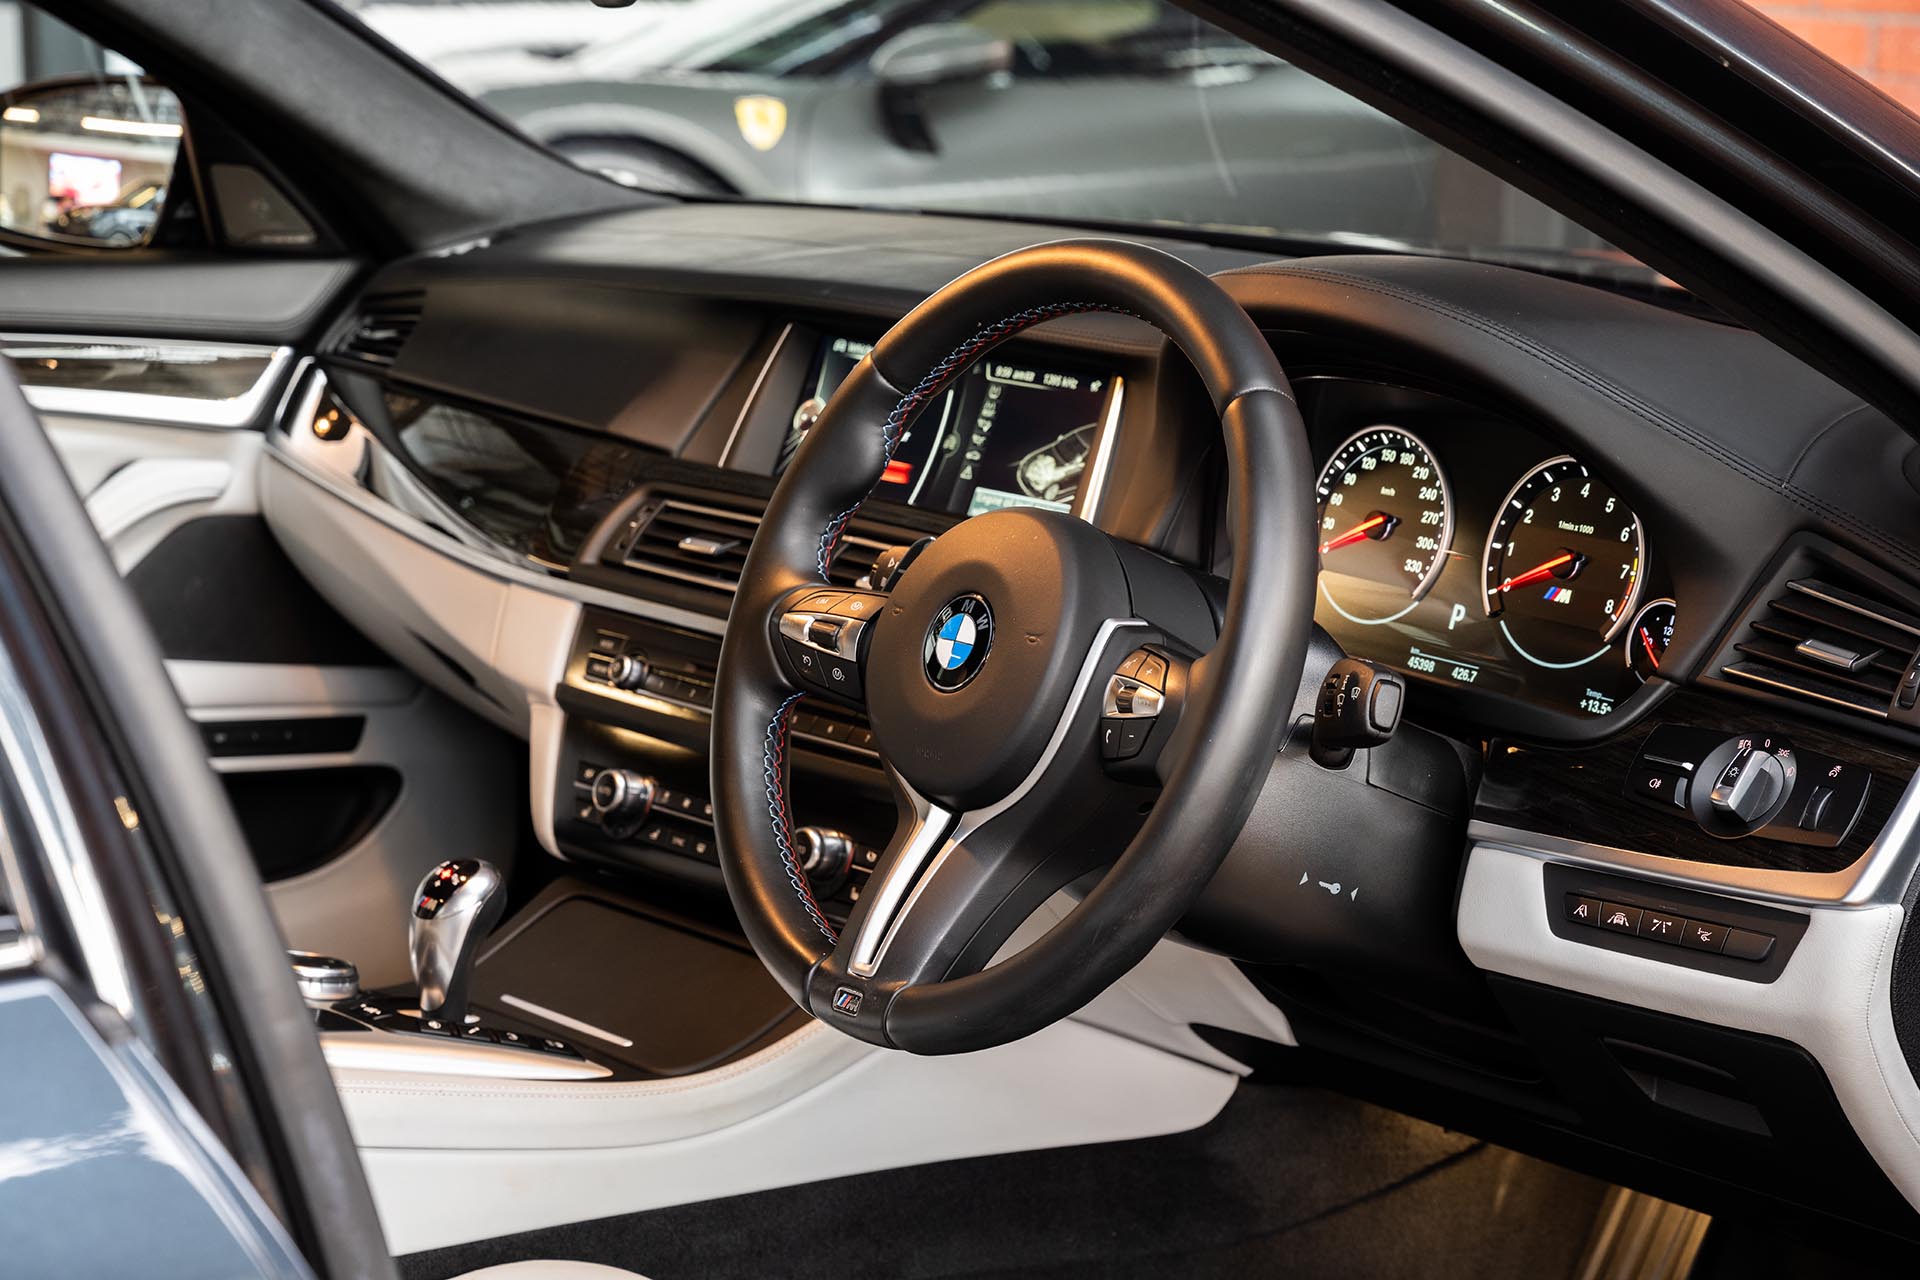 2015 BMW F10 M5 Sedan - Richmonds - Classic and Prestige Cars - Storage and  Sales - Adelaide, Australia